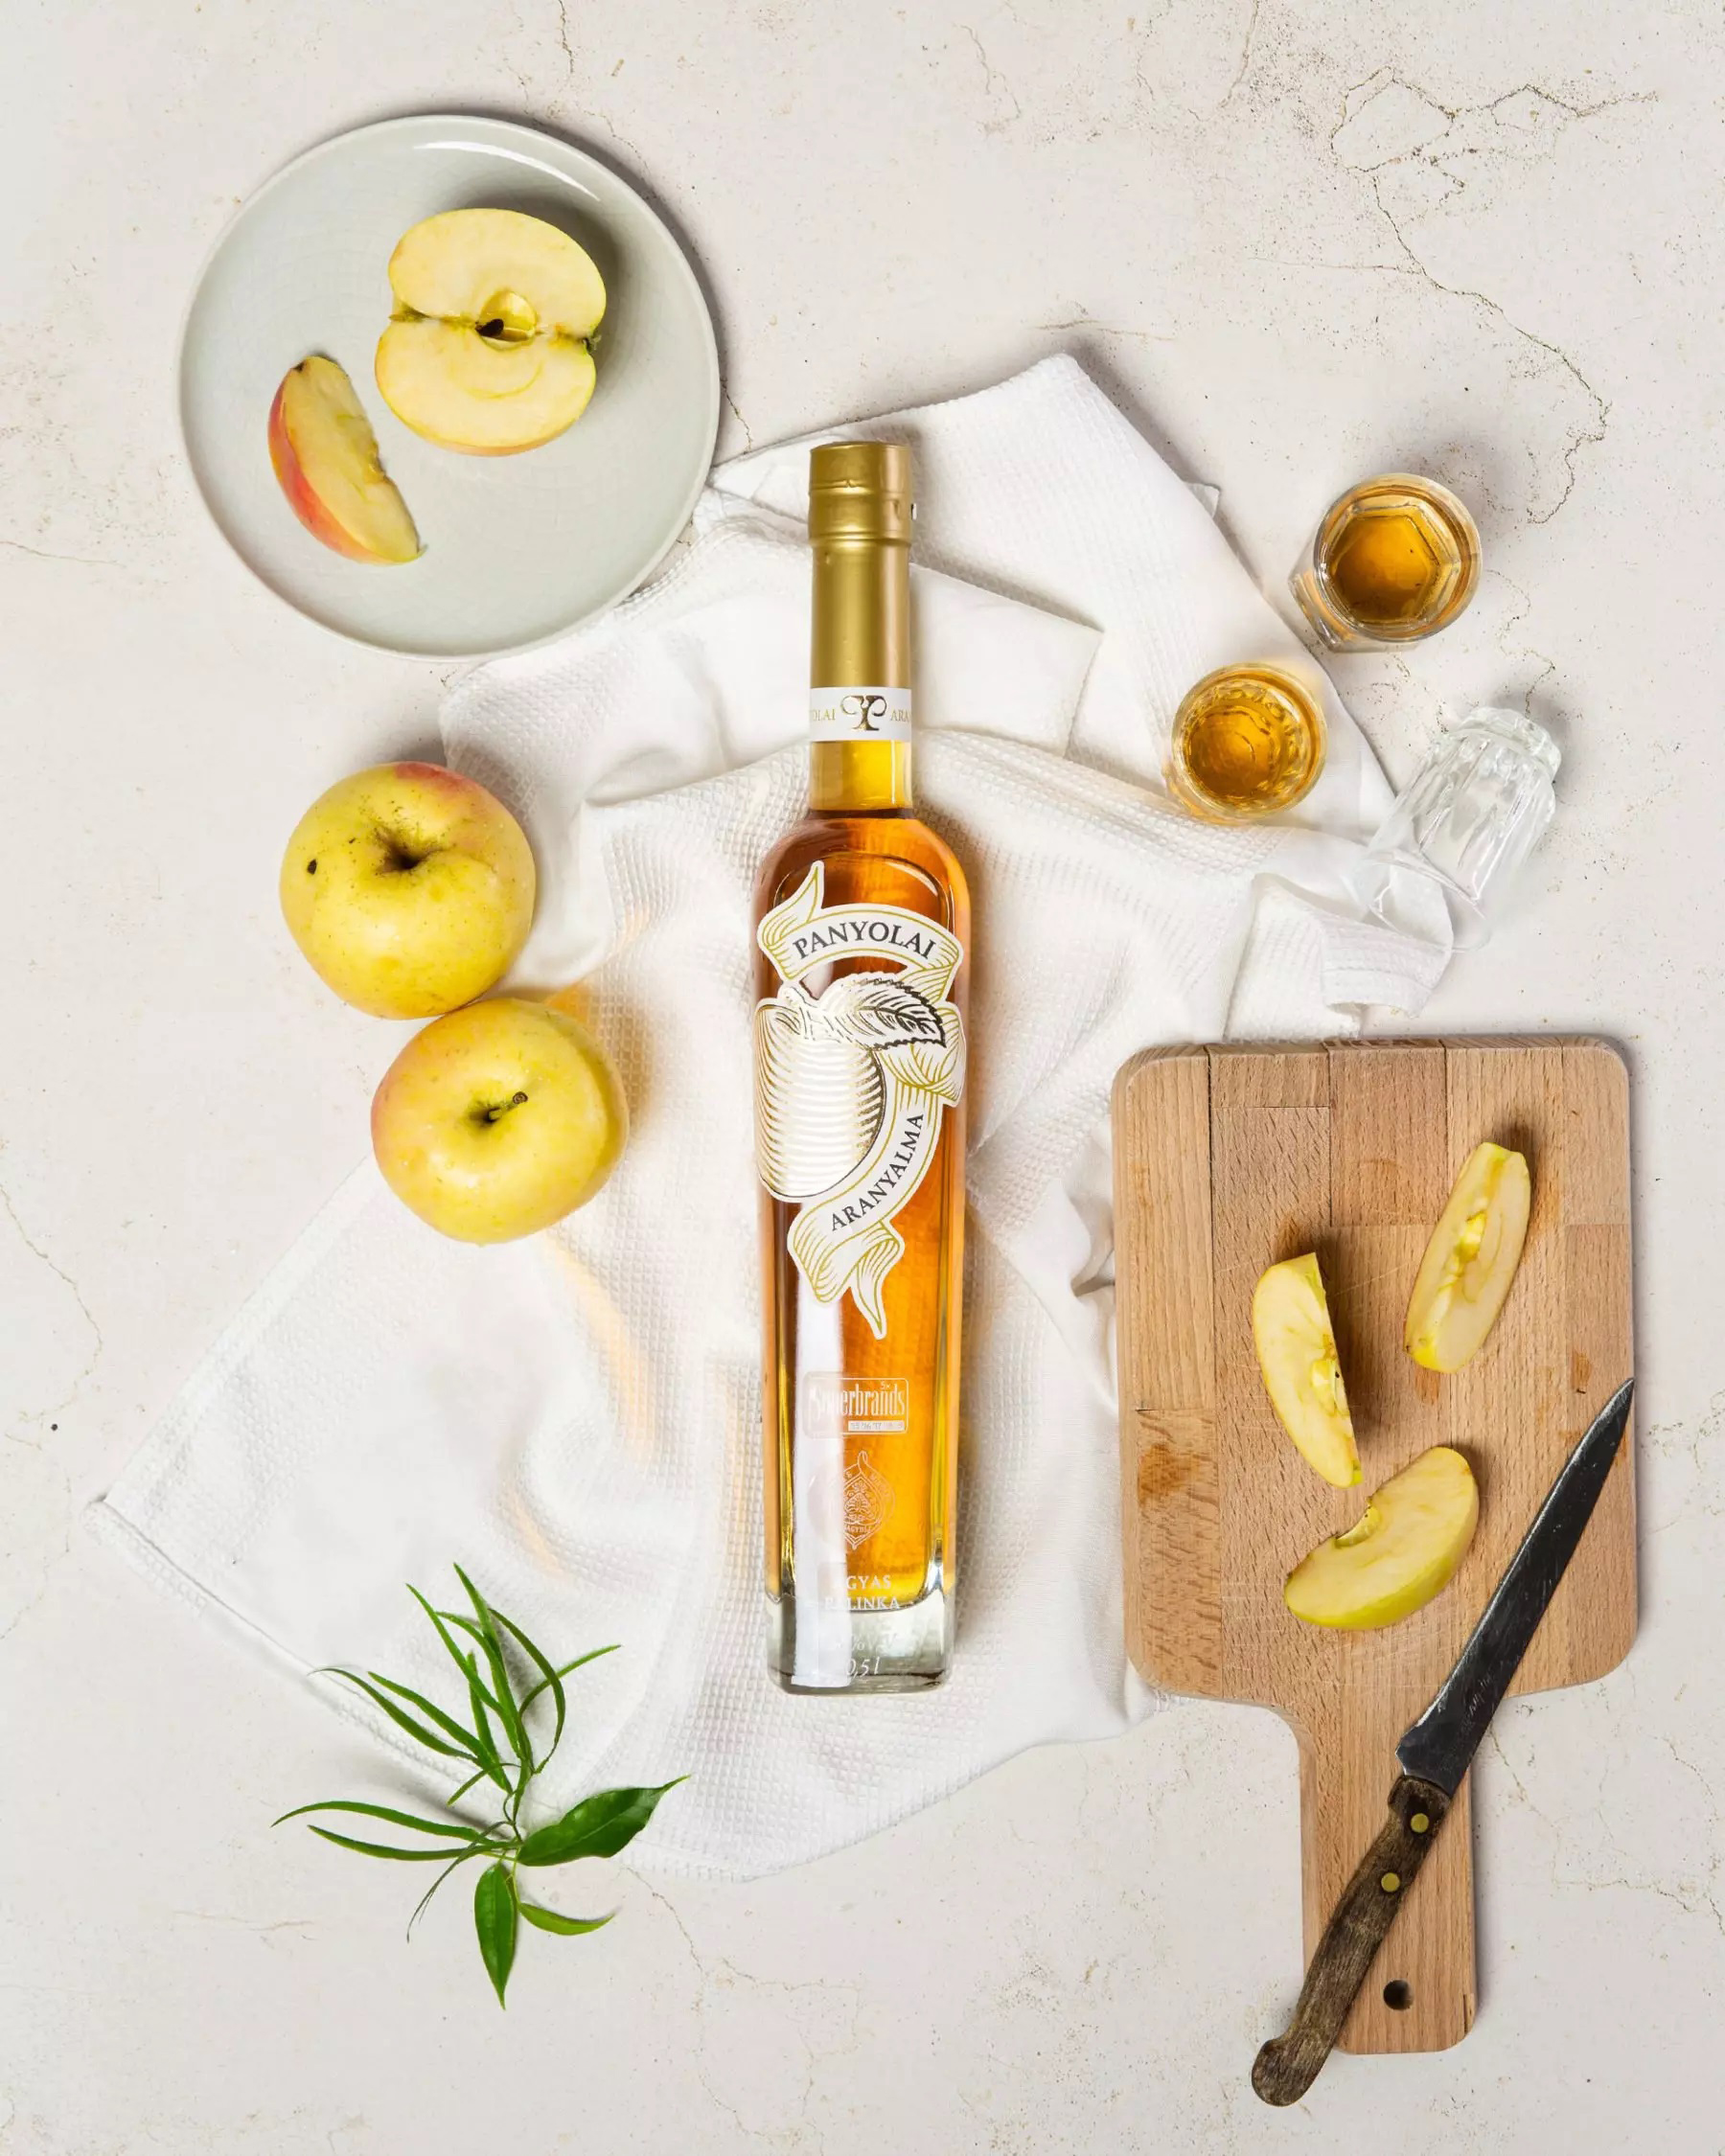 Panyolai Goldener Apfel-Brand & 2 Gläser in beiger Geschenkpack., 38% Vol. 0,5 ltr.